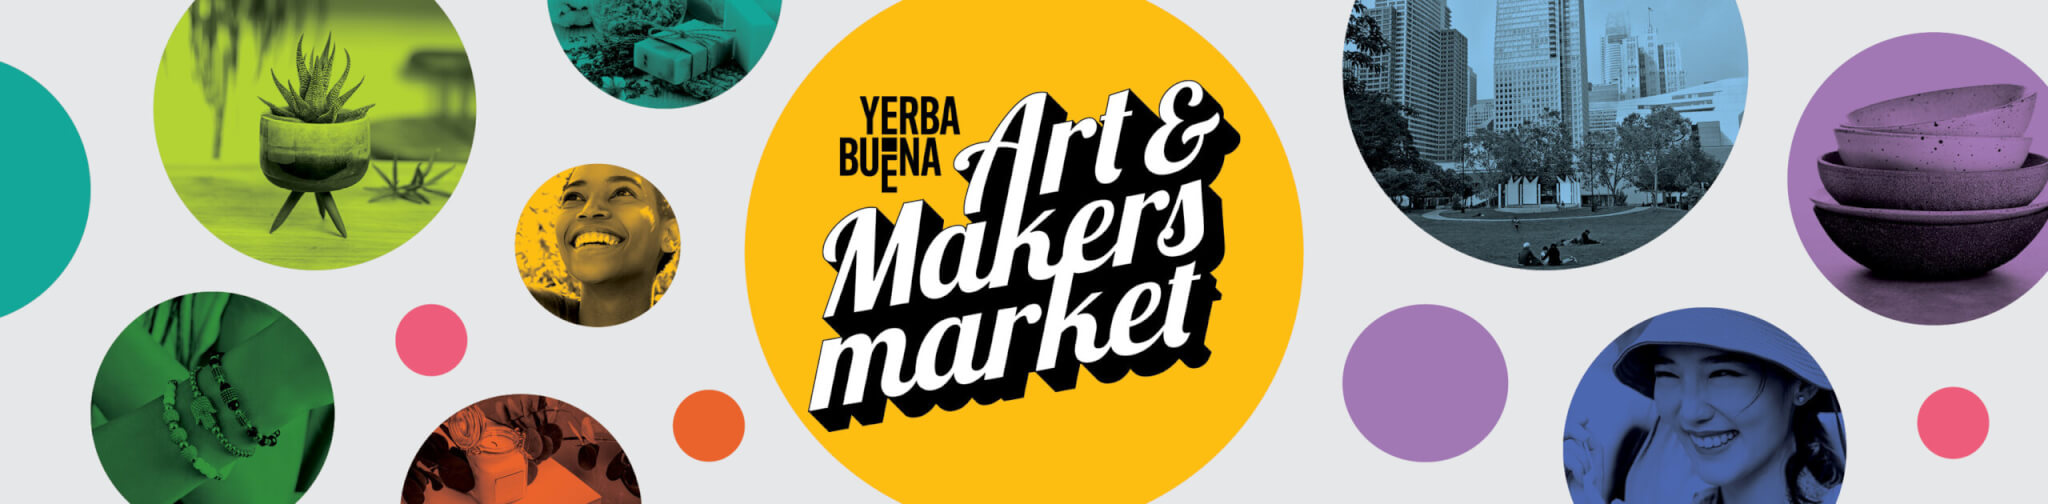 Yerba Buena Art & Makers Market In The News!